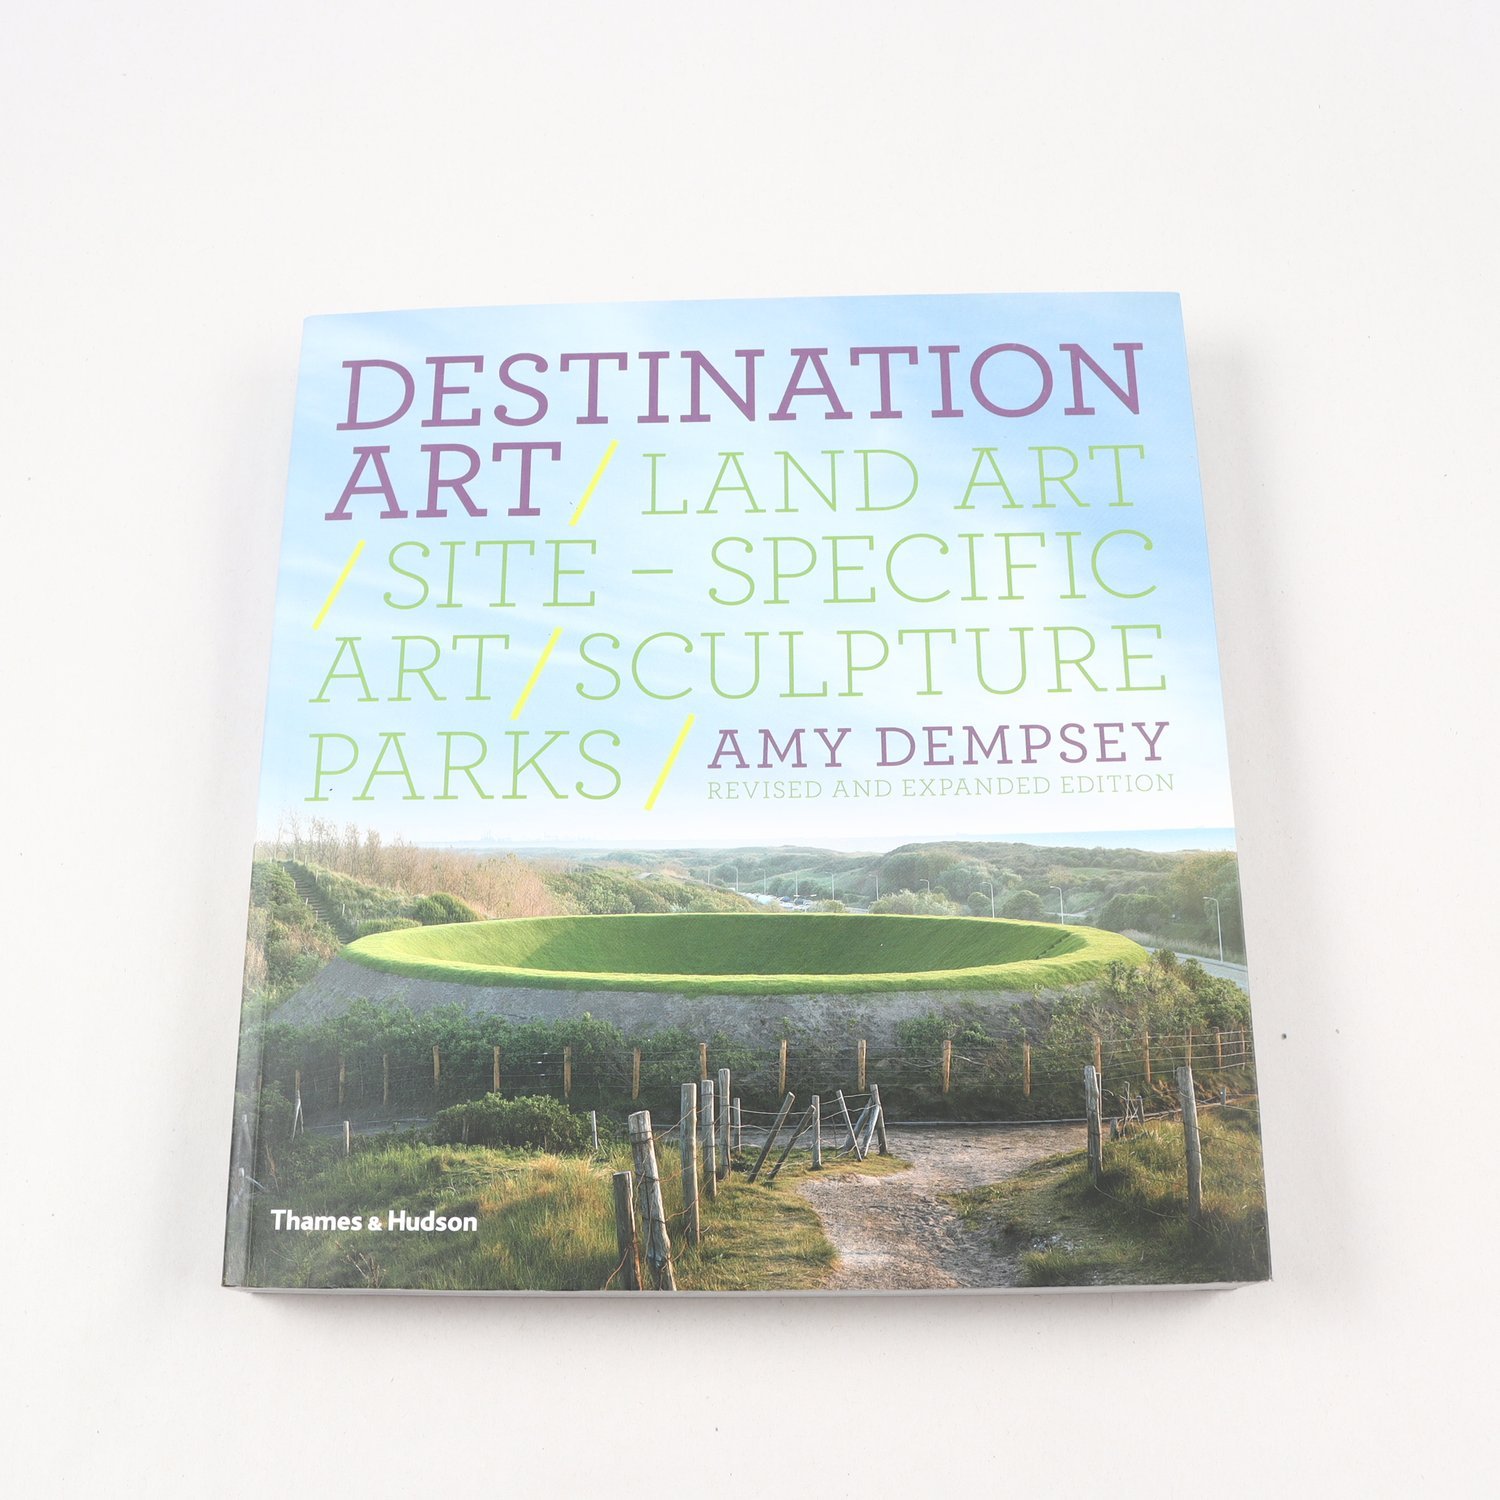 Destination Art, land art, sitespecific art, sculpture parks